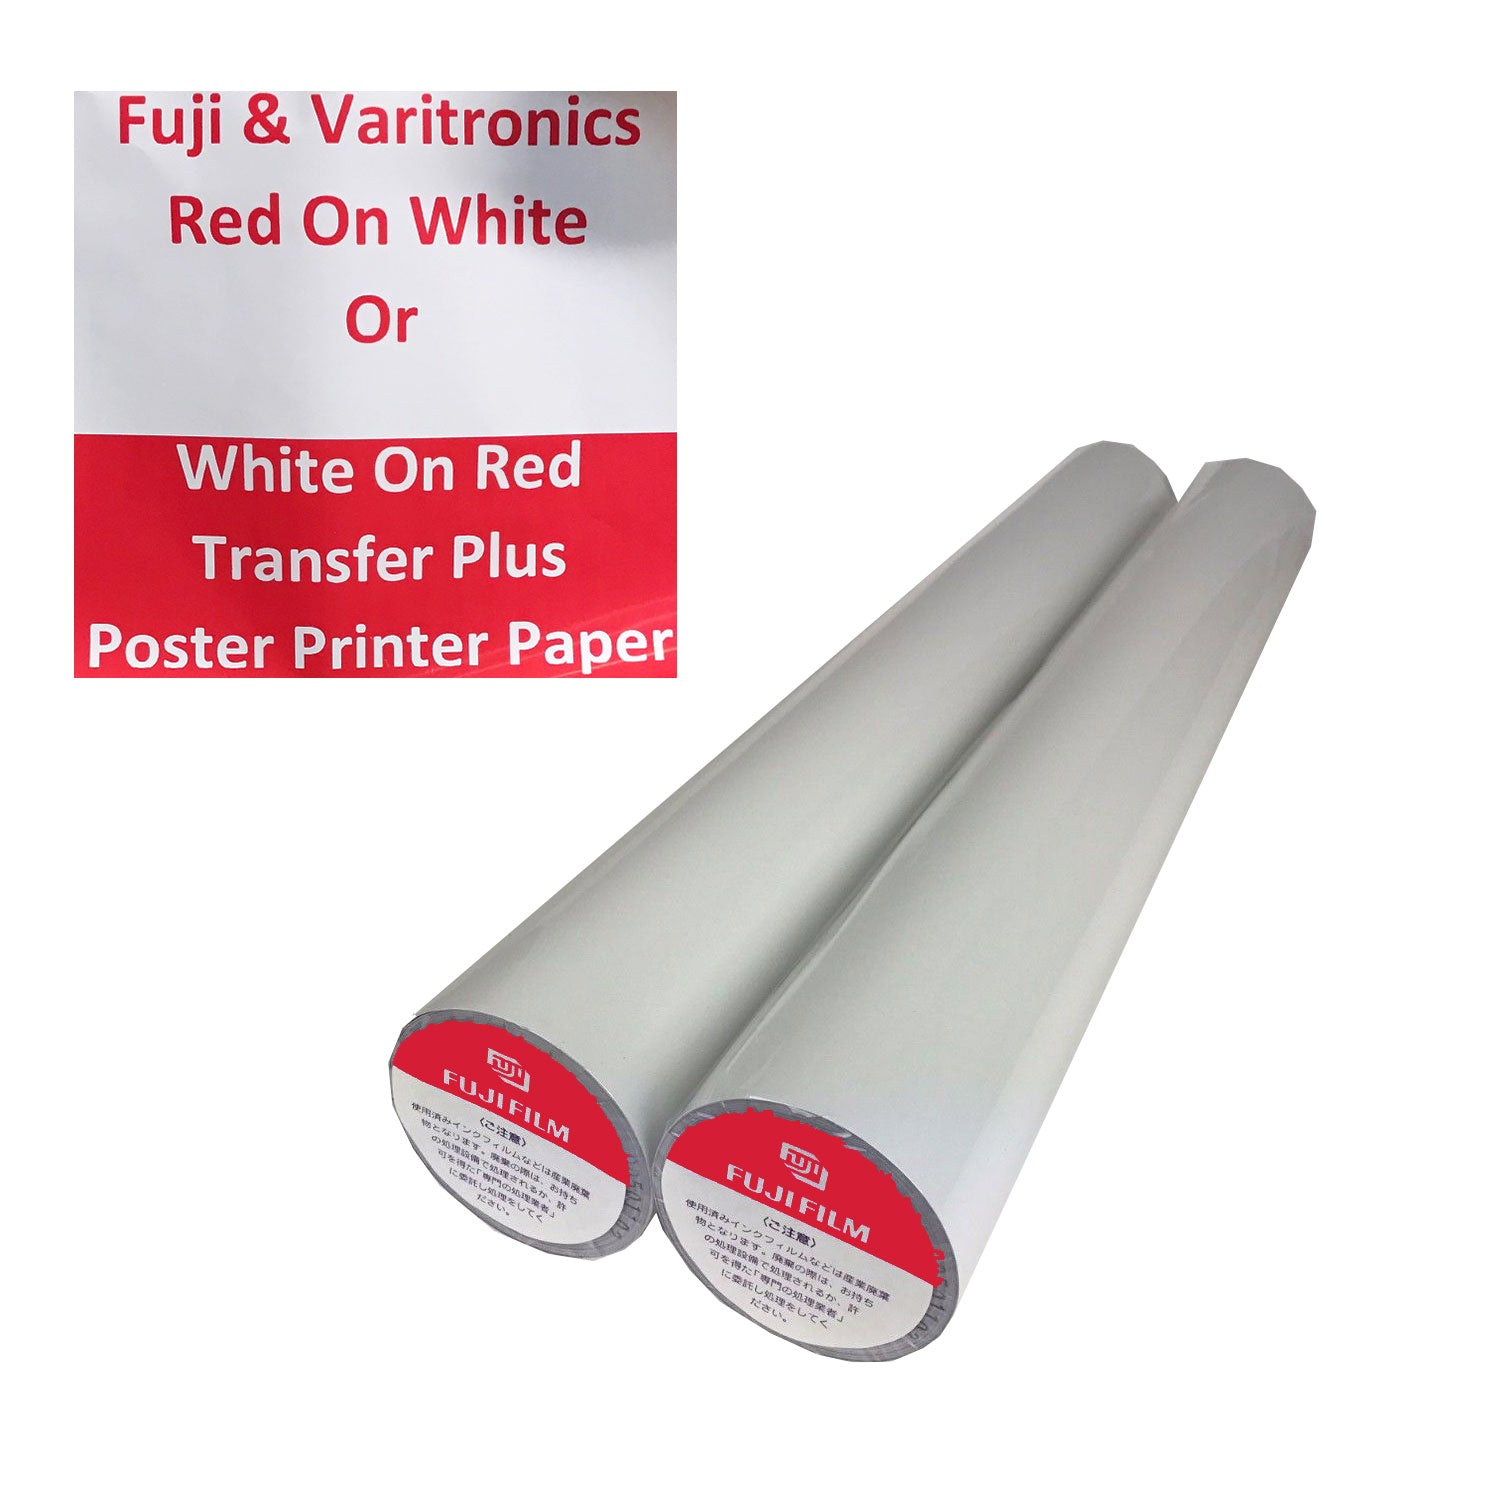 Fujifilm Varitronics Red On White Direct Thermal Poster Printer